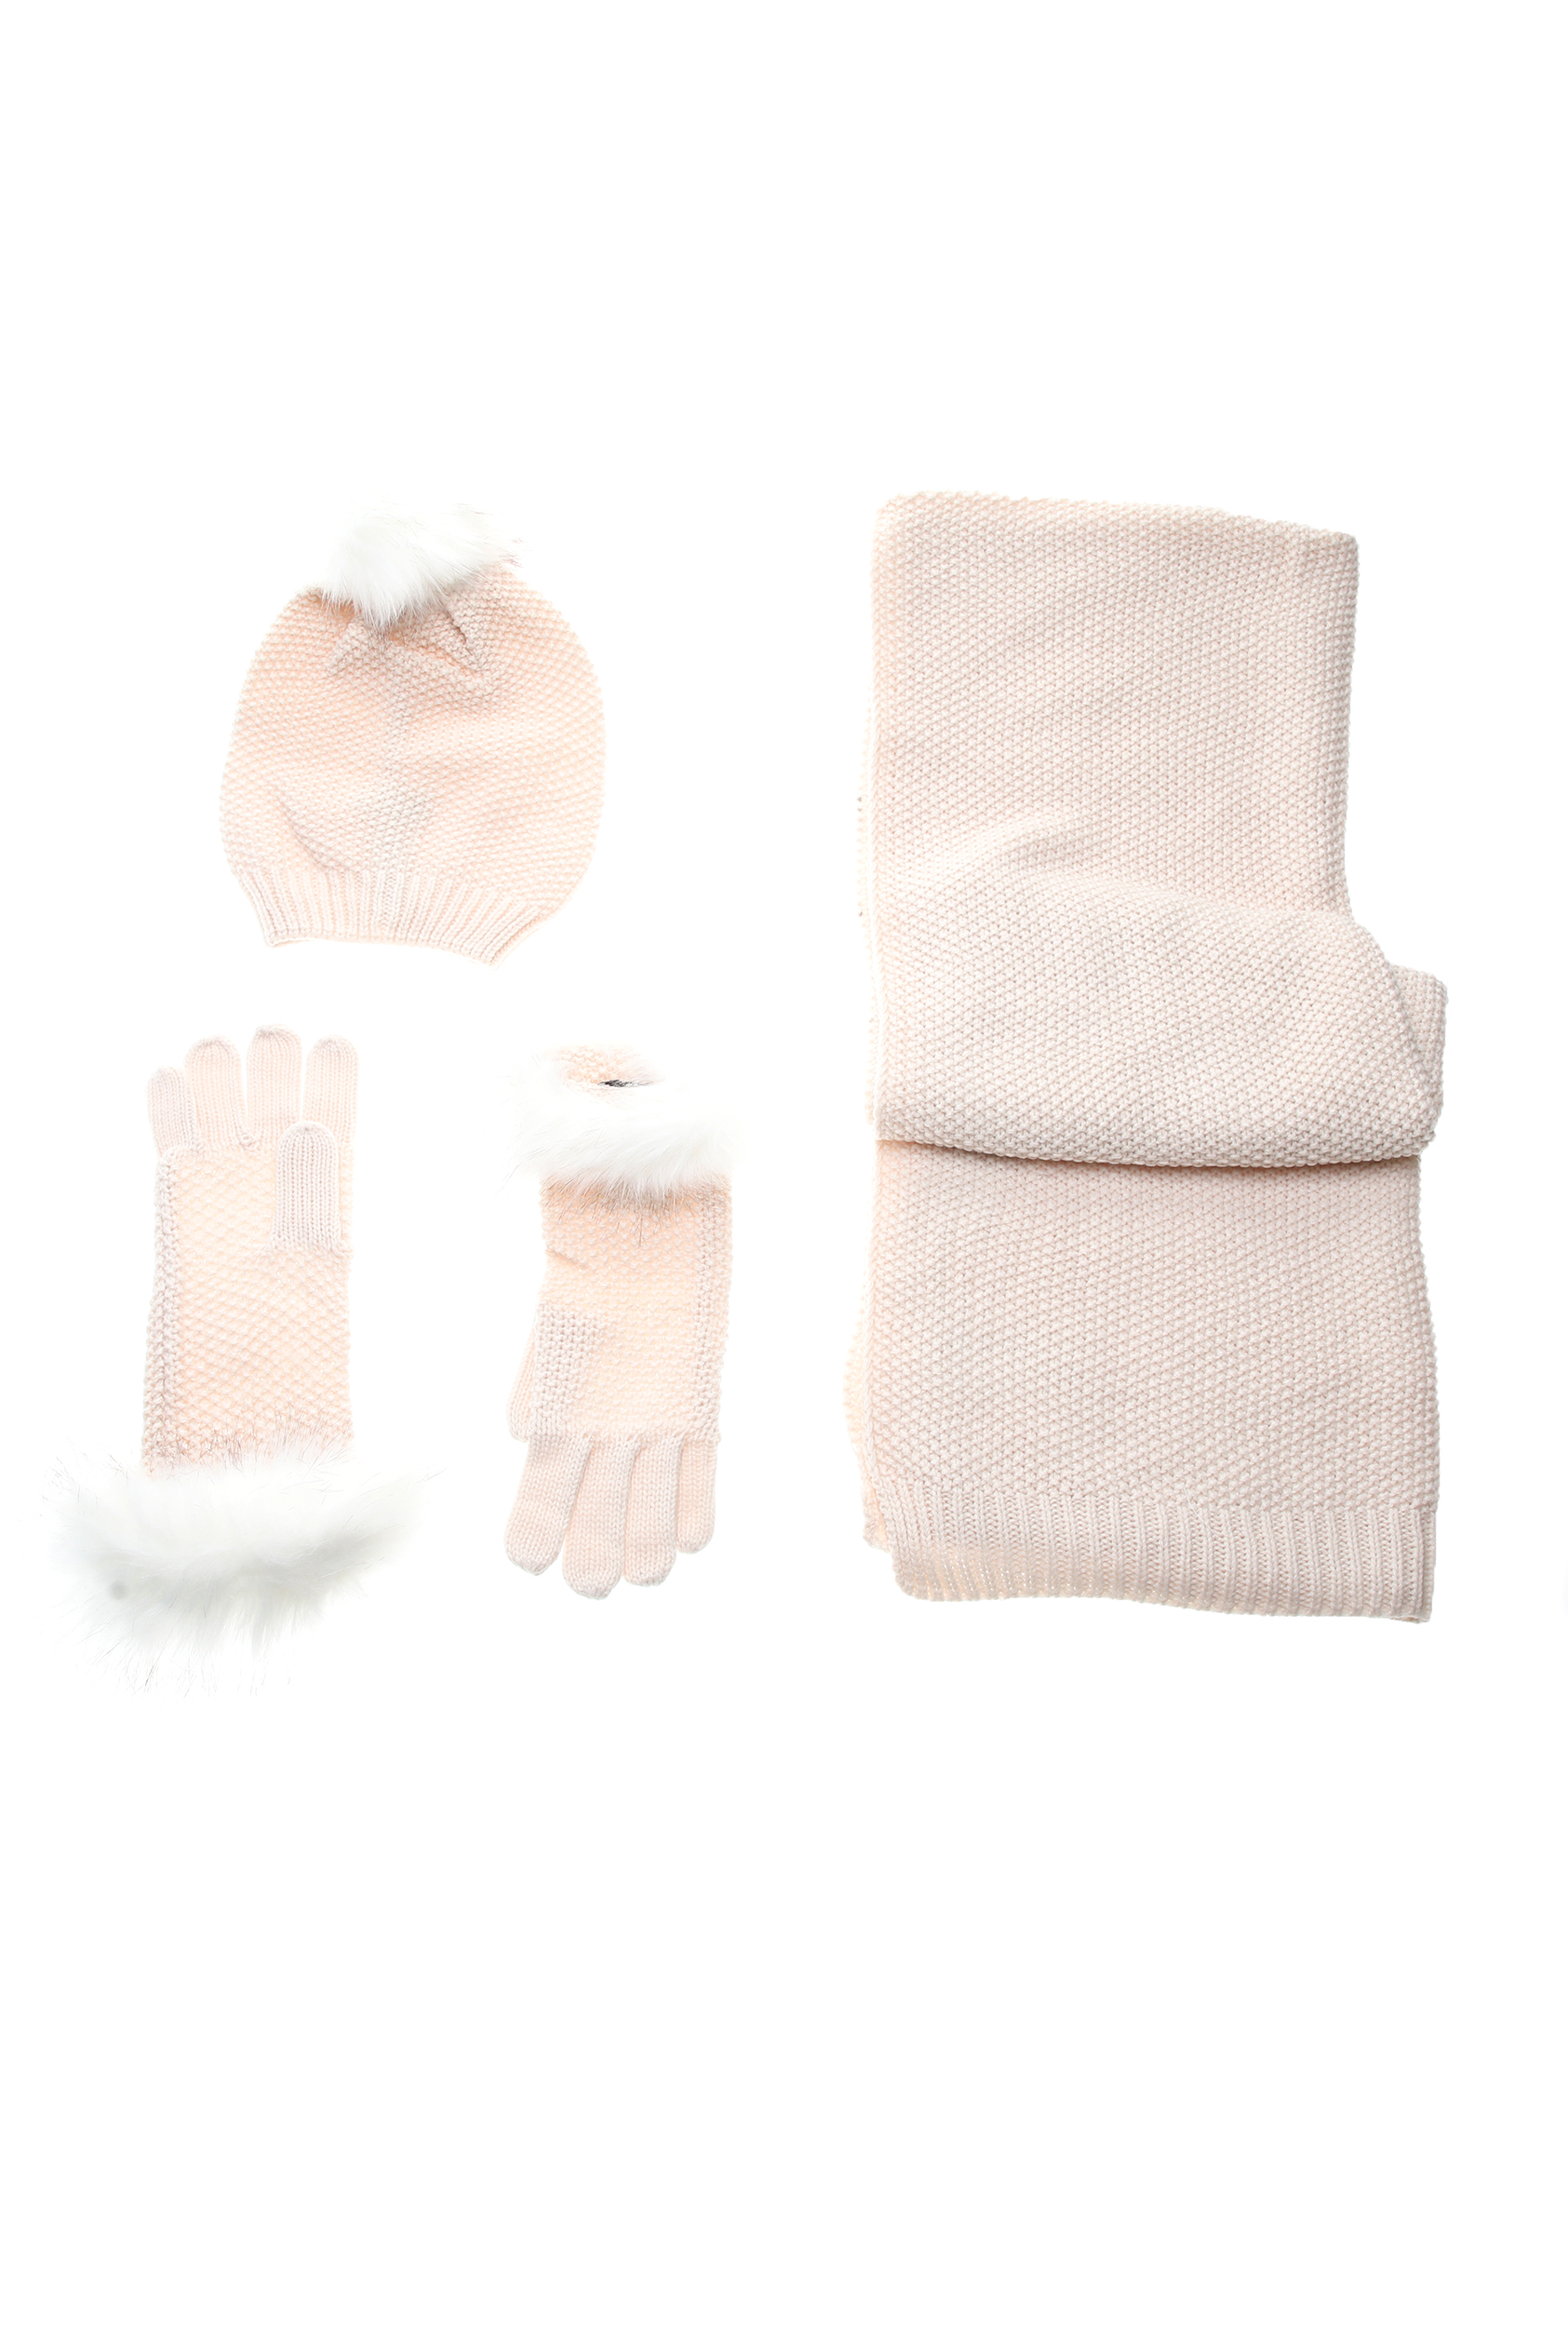 MOLLY BRACKEN – Γυναικείο σετ από κασκόλ, σκούφο και γάντια MOLLY BRACKEN μπεζ 1795707.0-M3M6